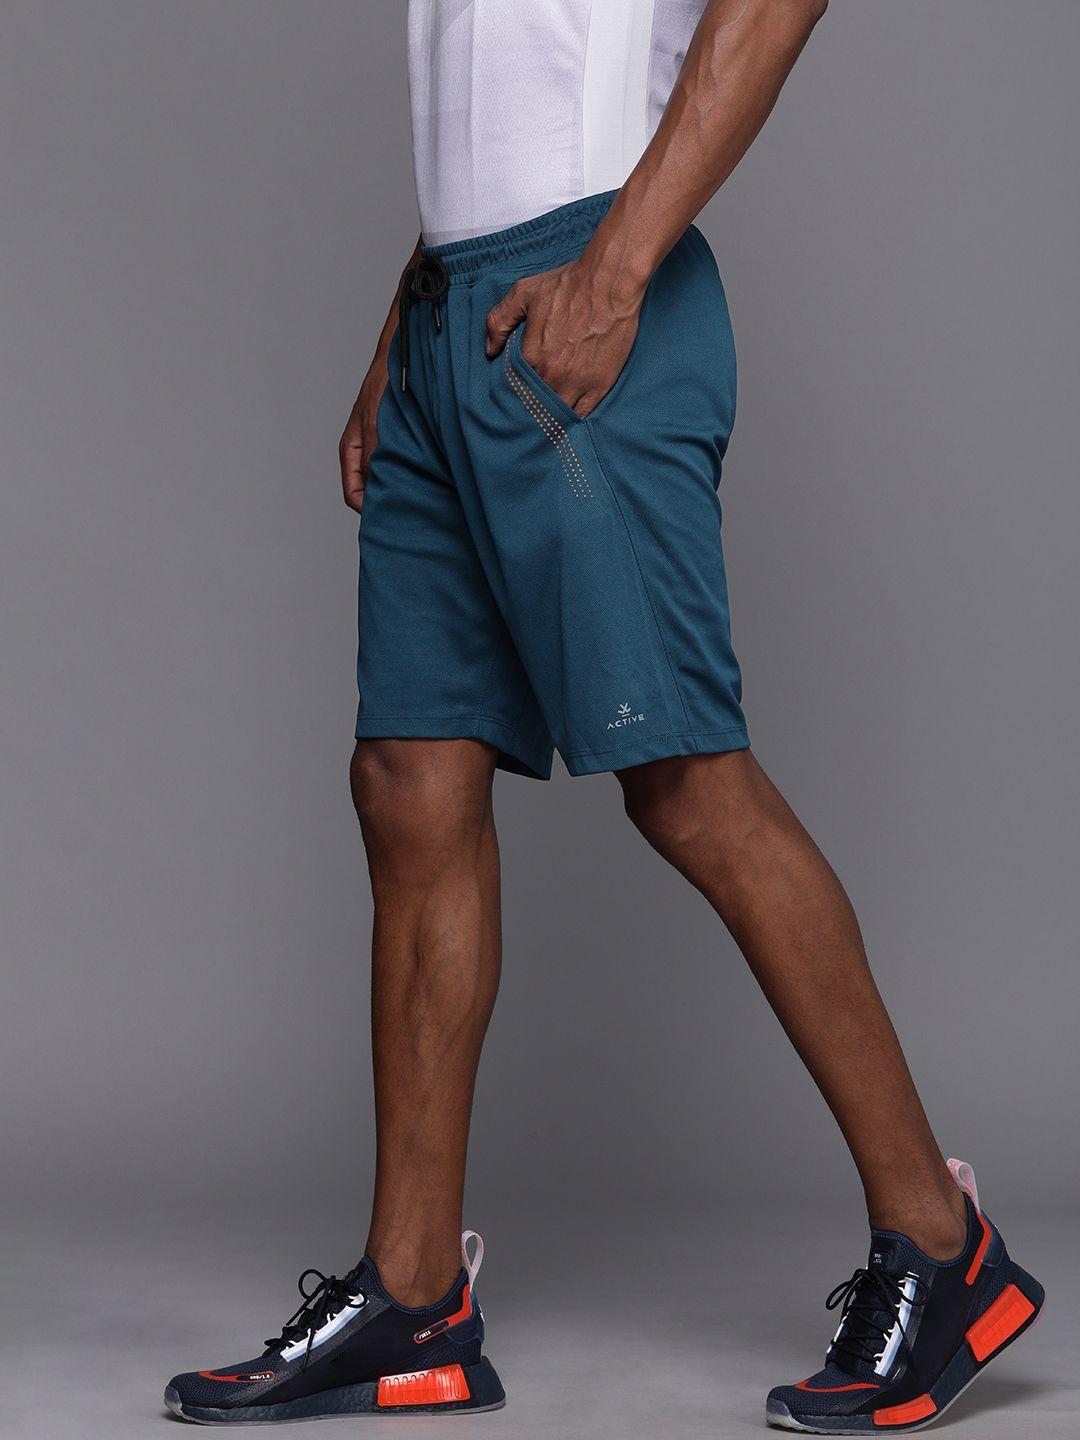 wrogn active men teal blue slim fit sports shorts